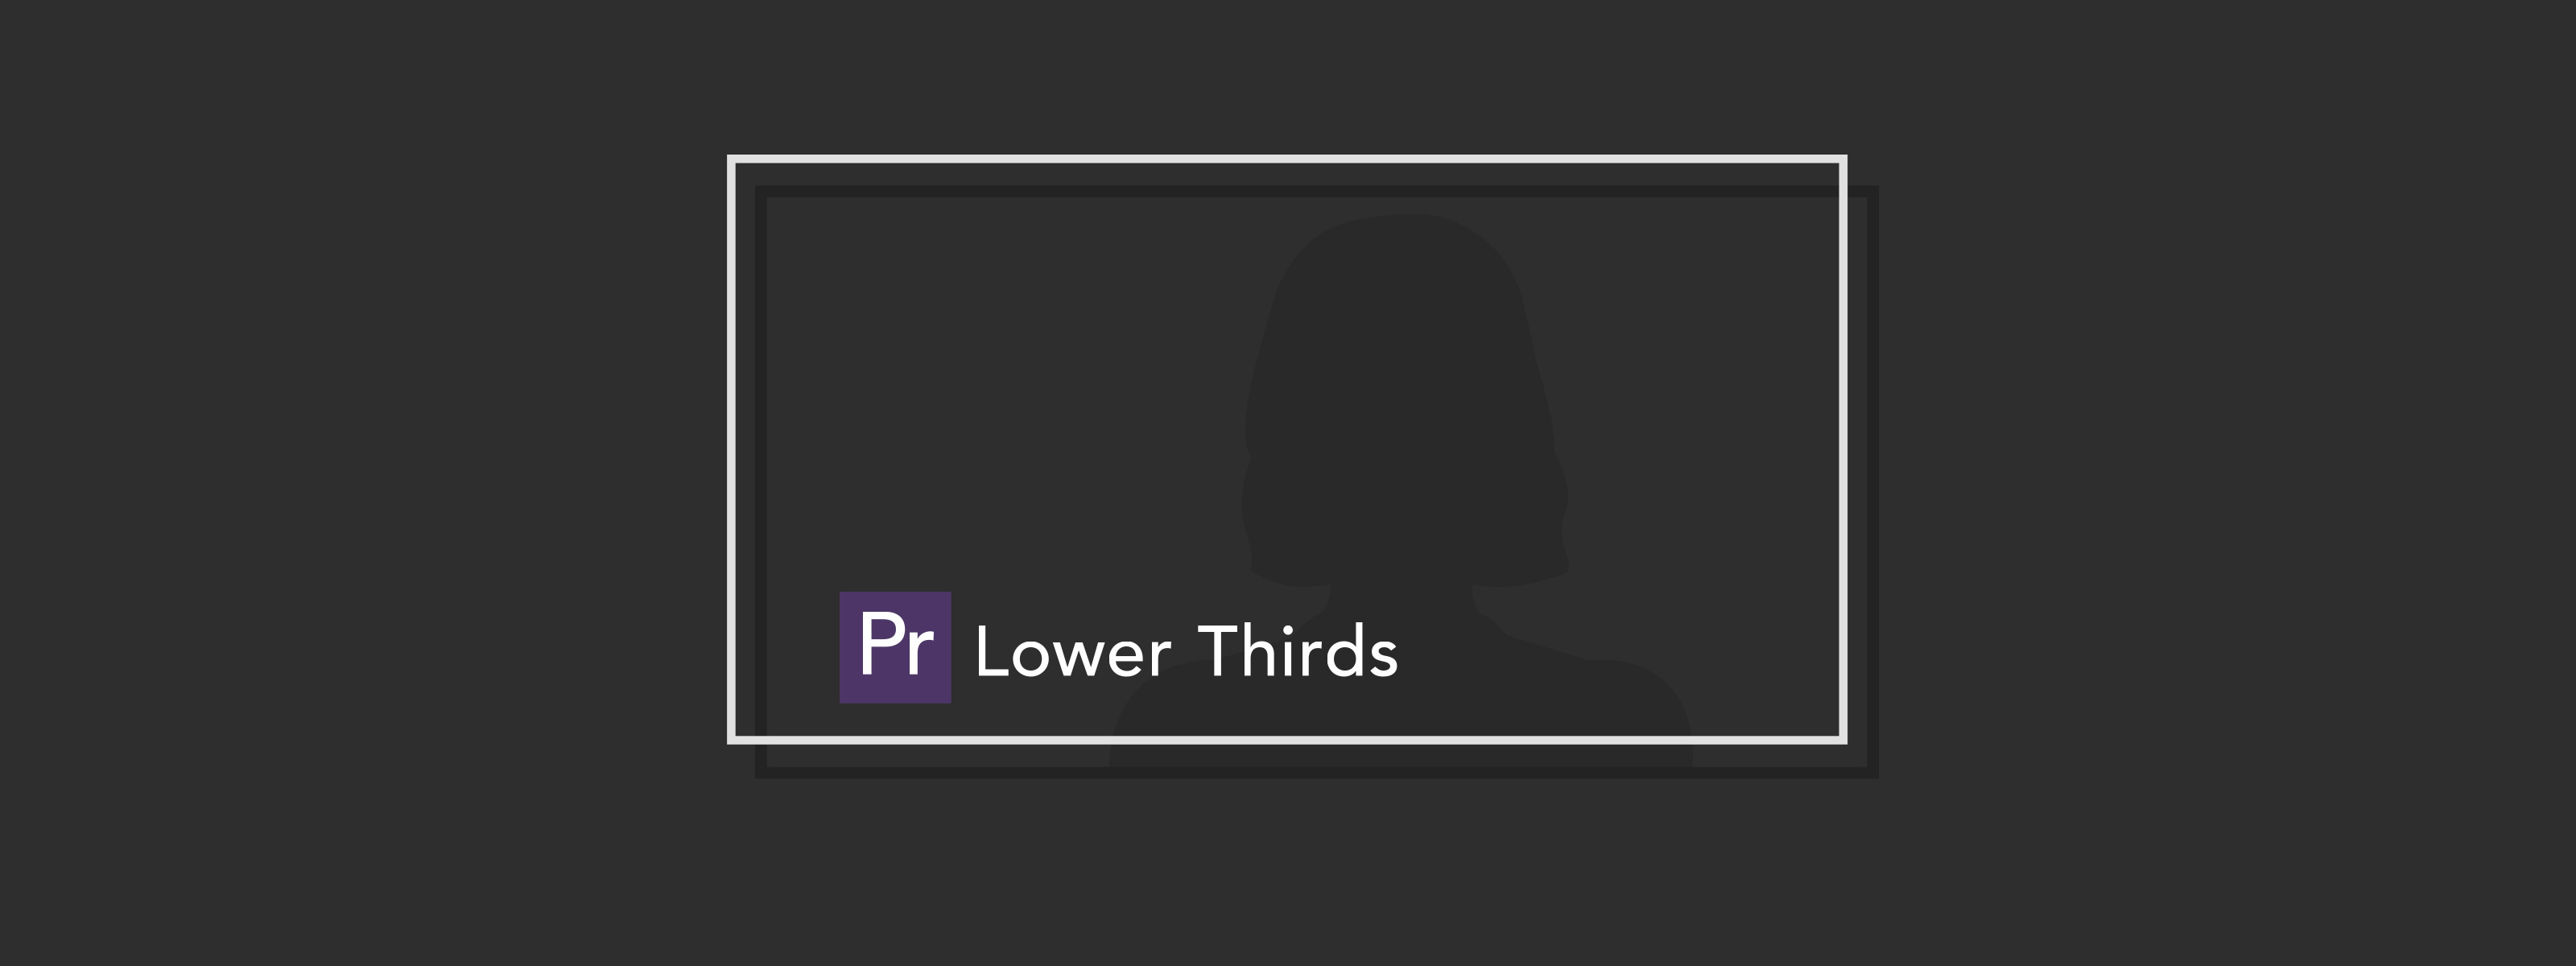 premiere lower thirds templates